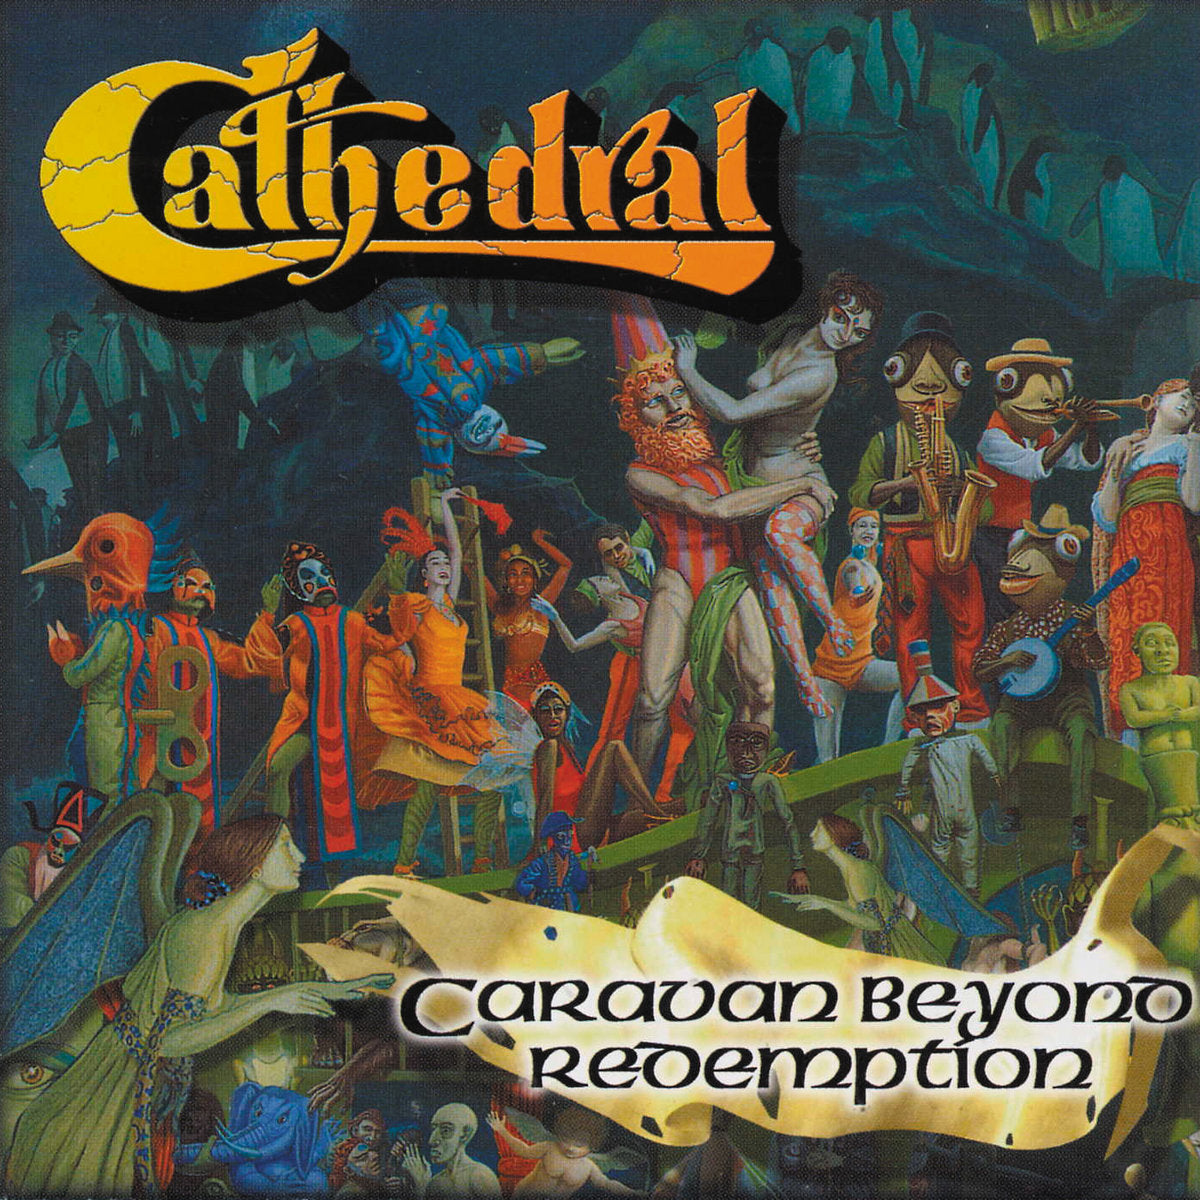 Cathedral "Caravan Beyond Redemption" Digital Download